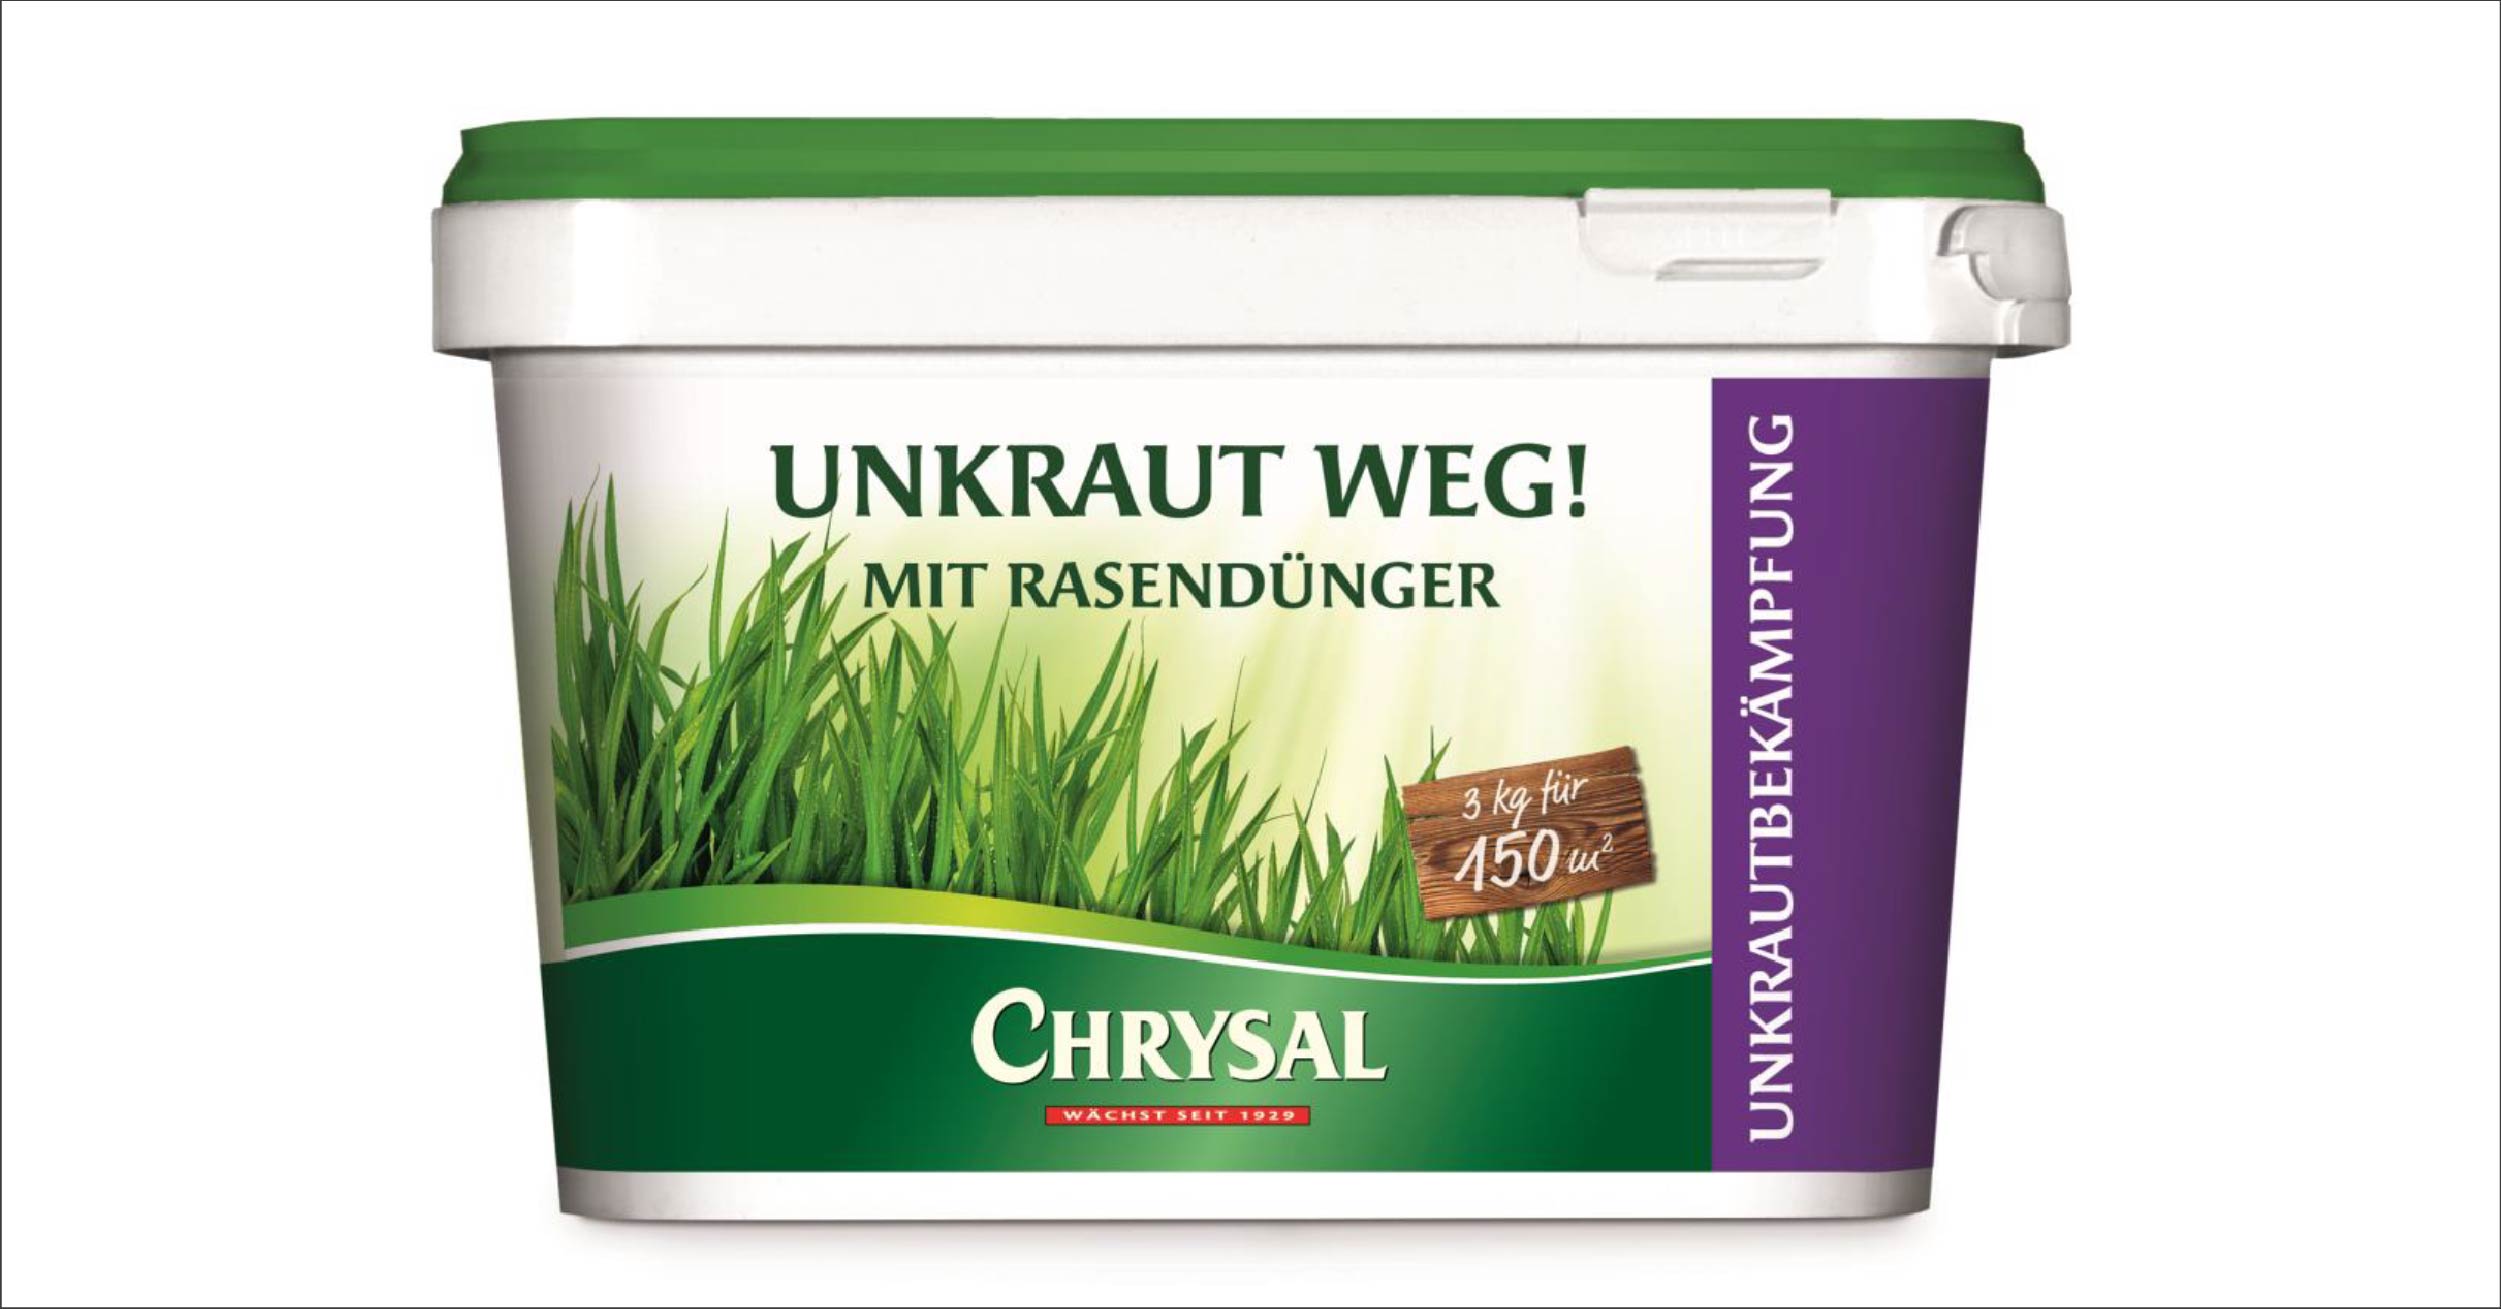 Chrysal Unkraut weg! mit Rasendünger